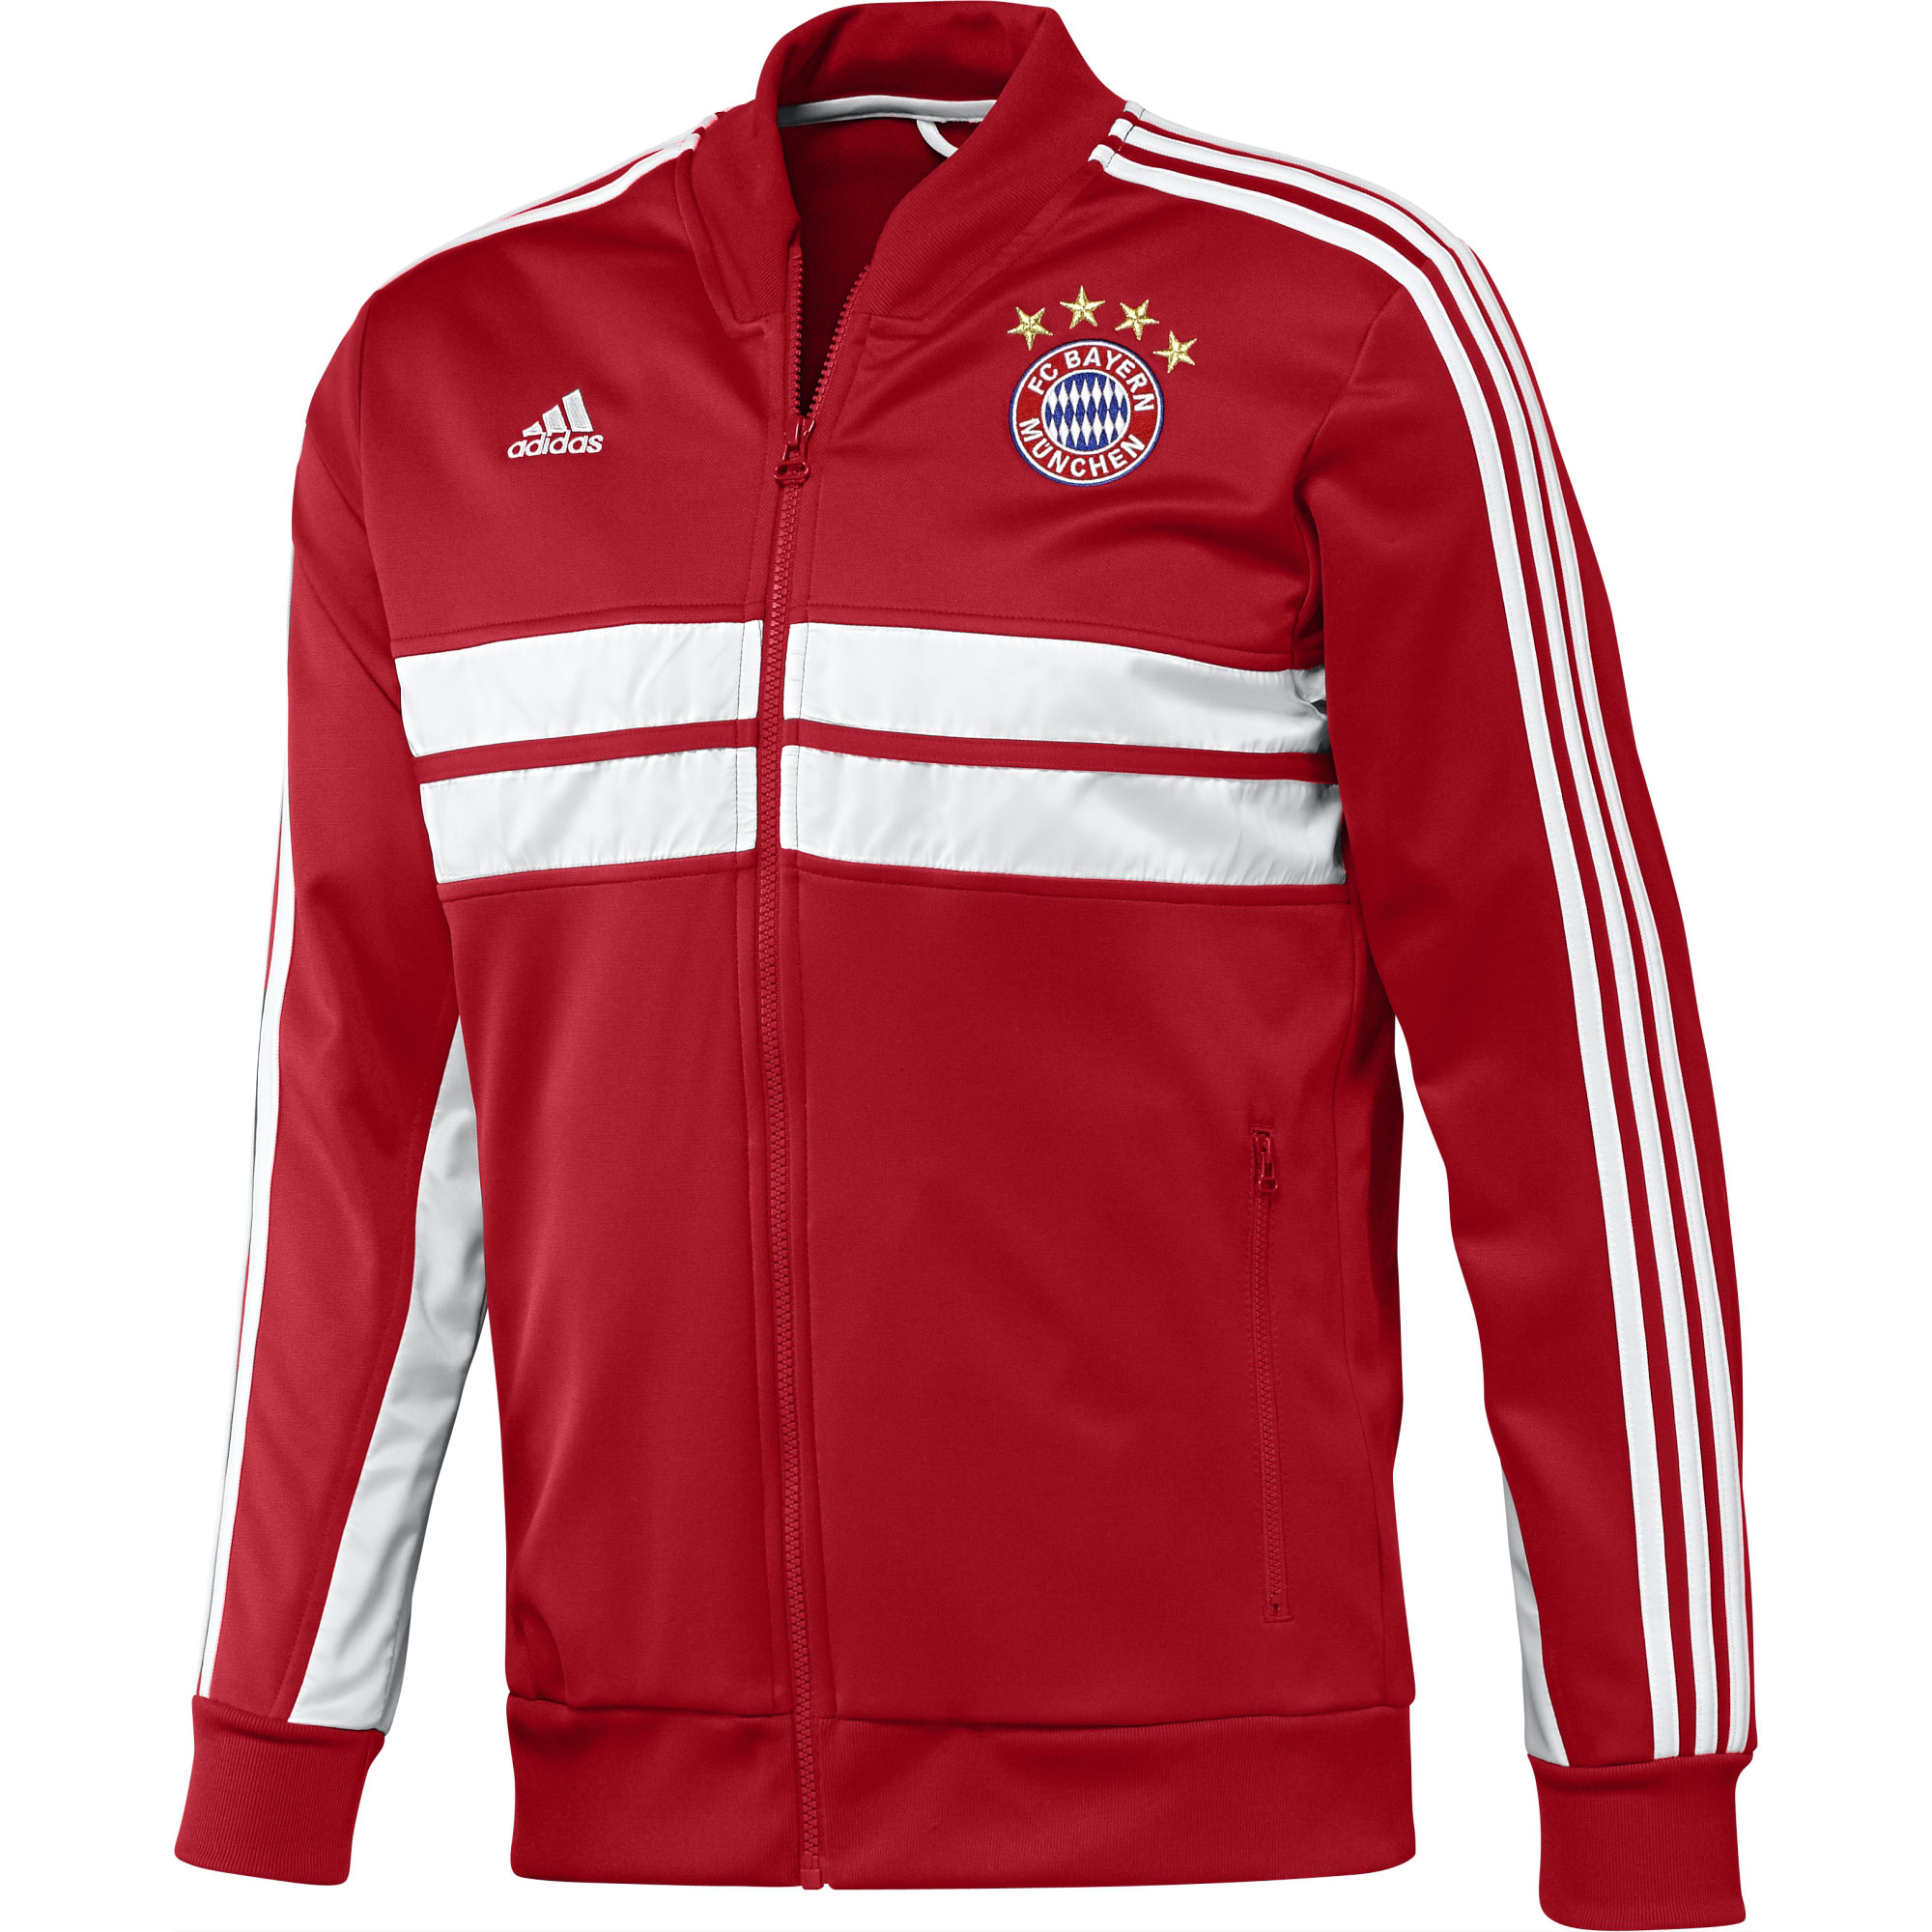 13-14 Bayern Munich Red Anthen Jacket - Click Image to Close